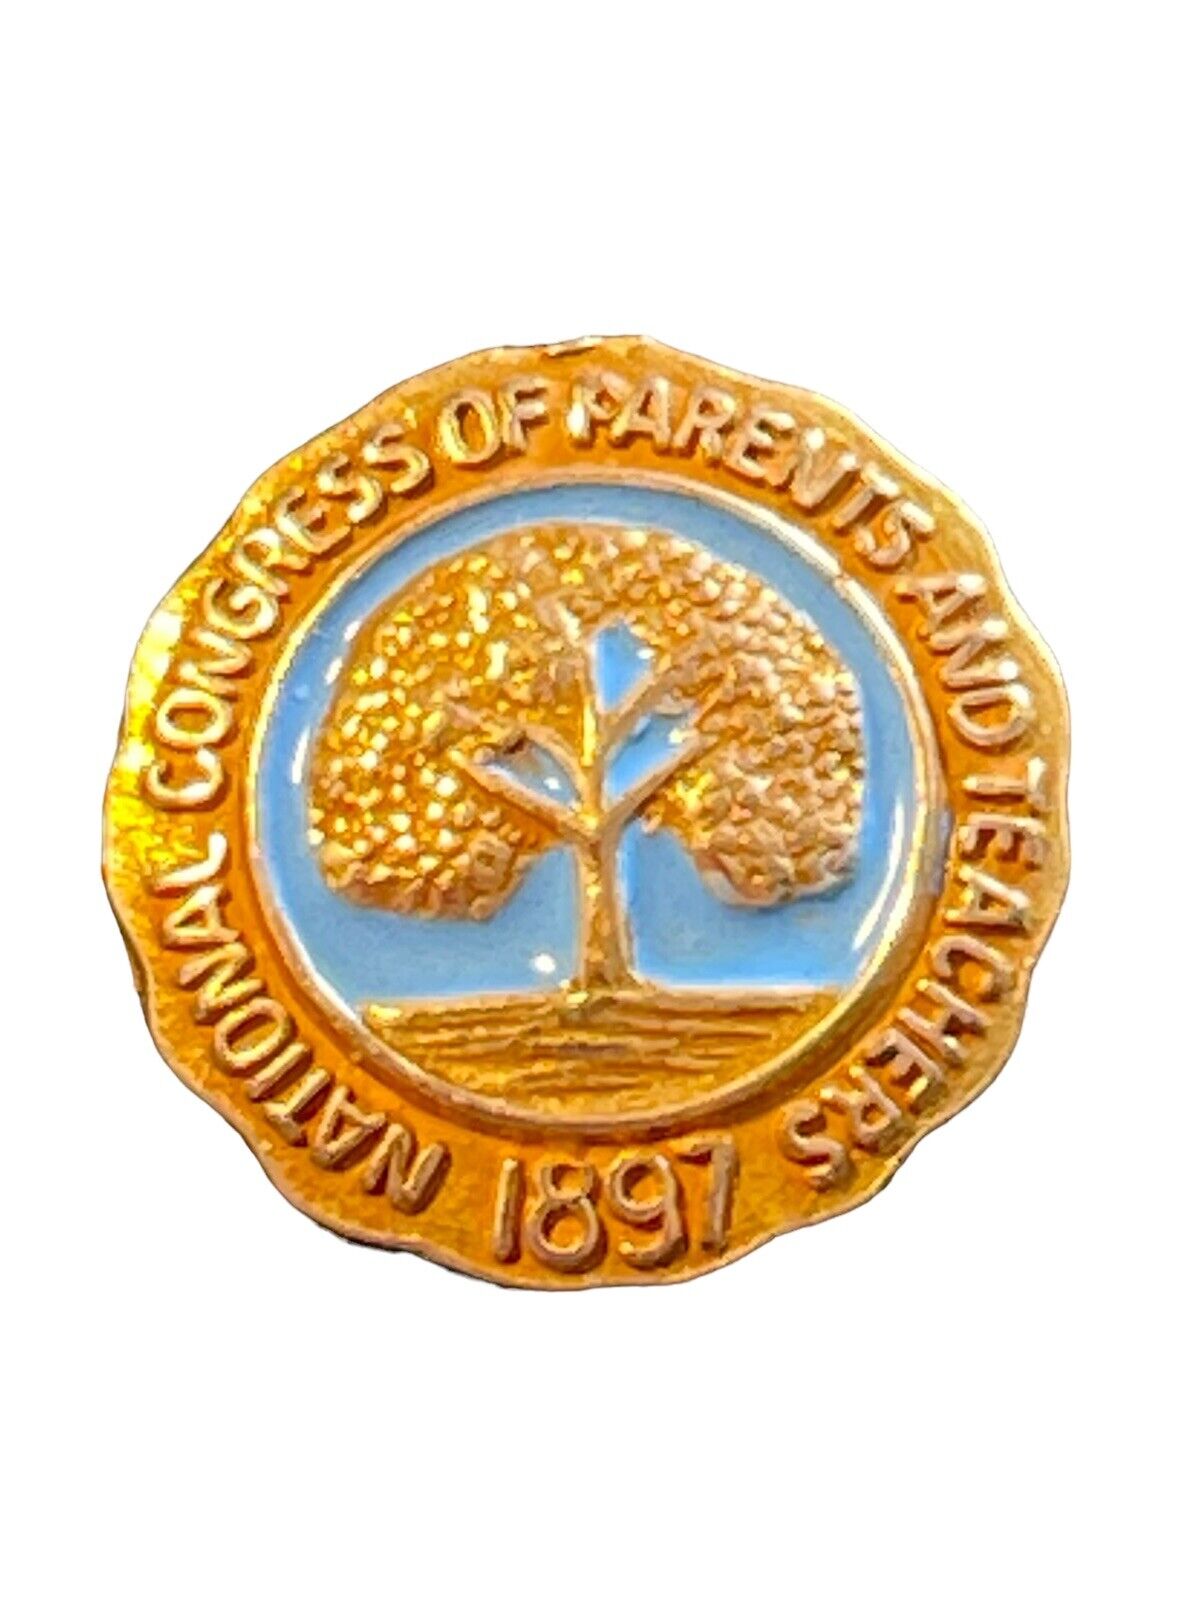 VTG PTA Pin “National Congress of Parents and Teachers 1897 “Lapel Tie Tac Gift